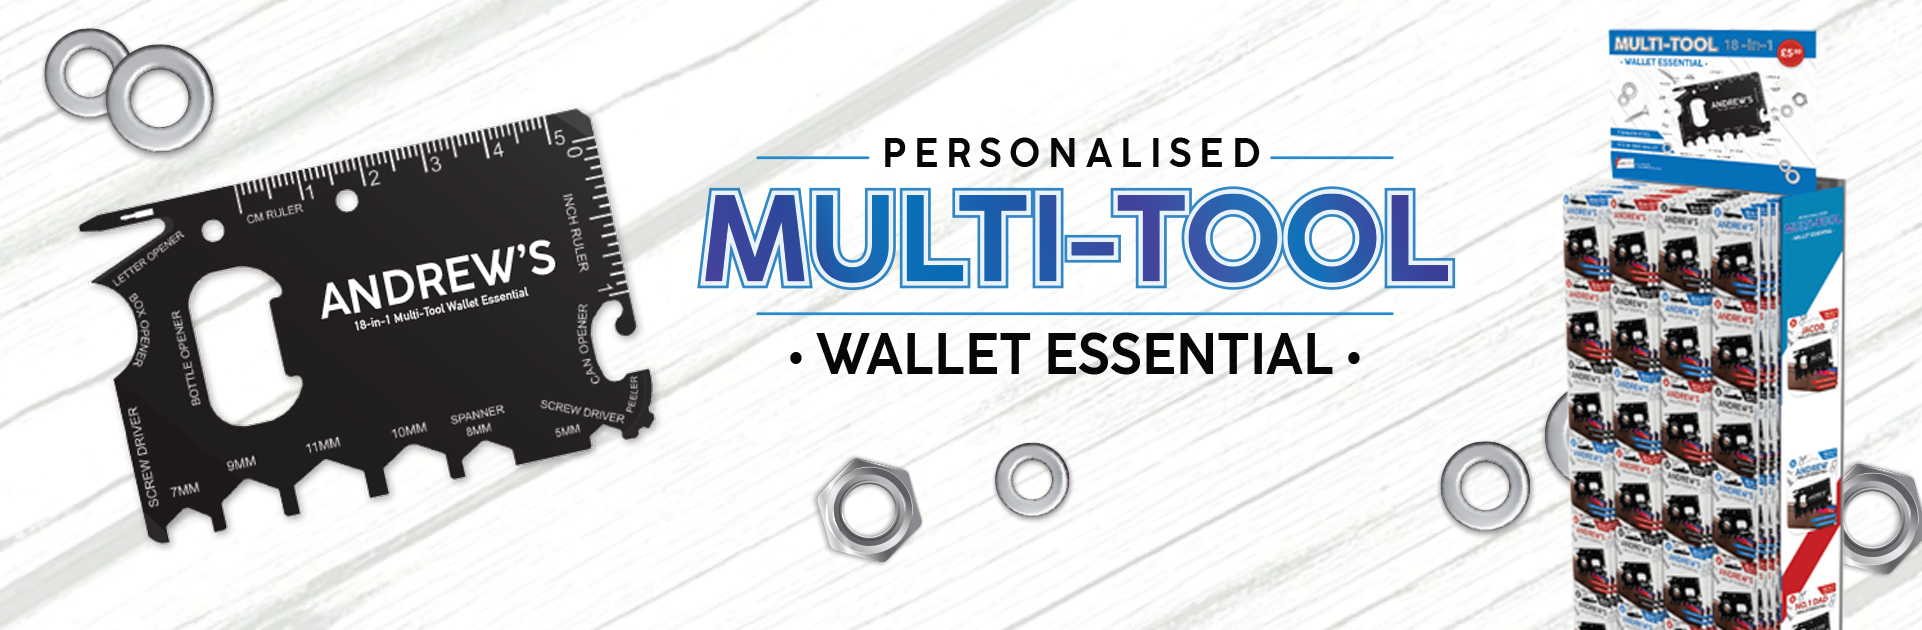 wallet essential link<br />
